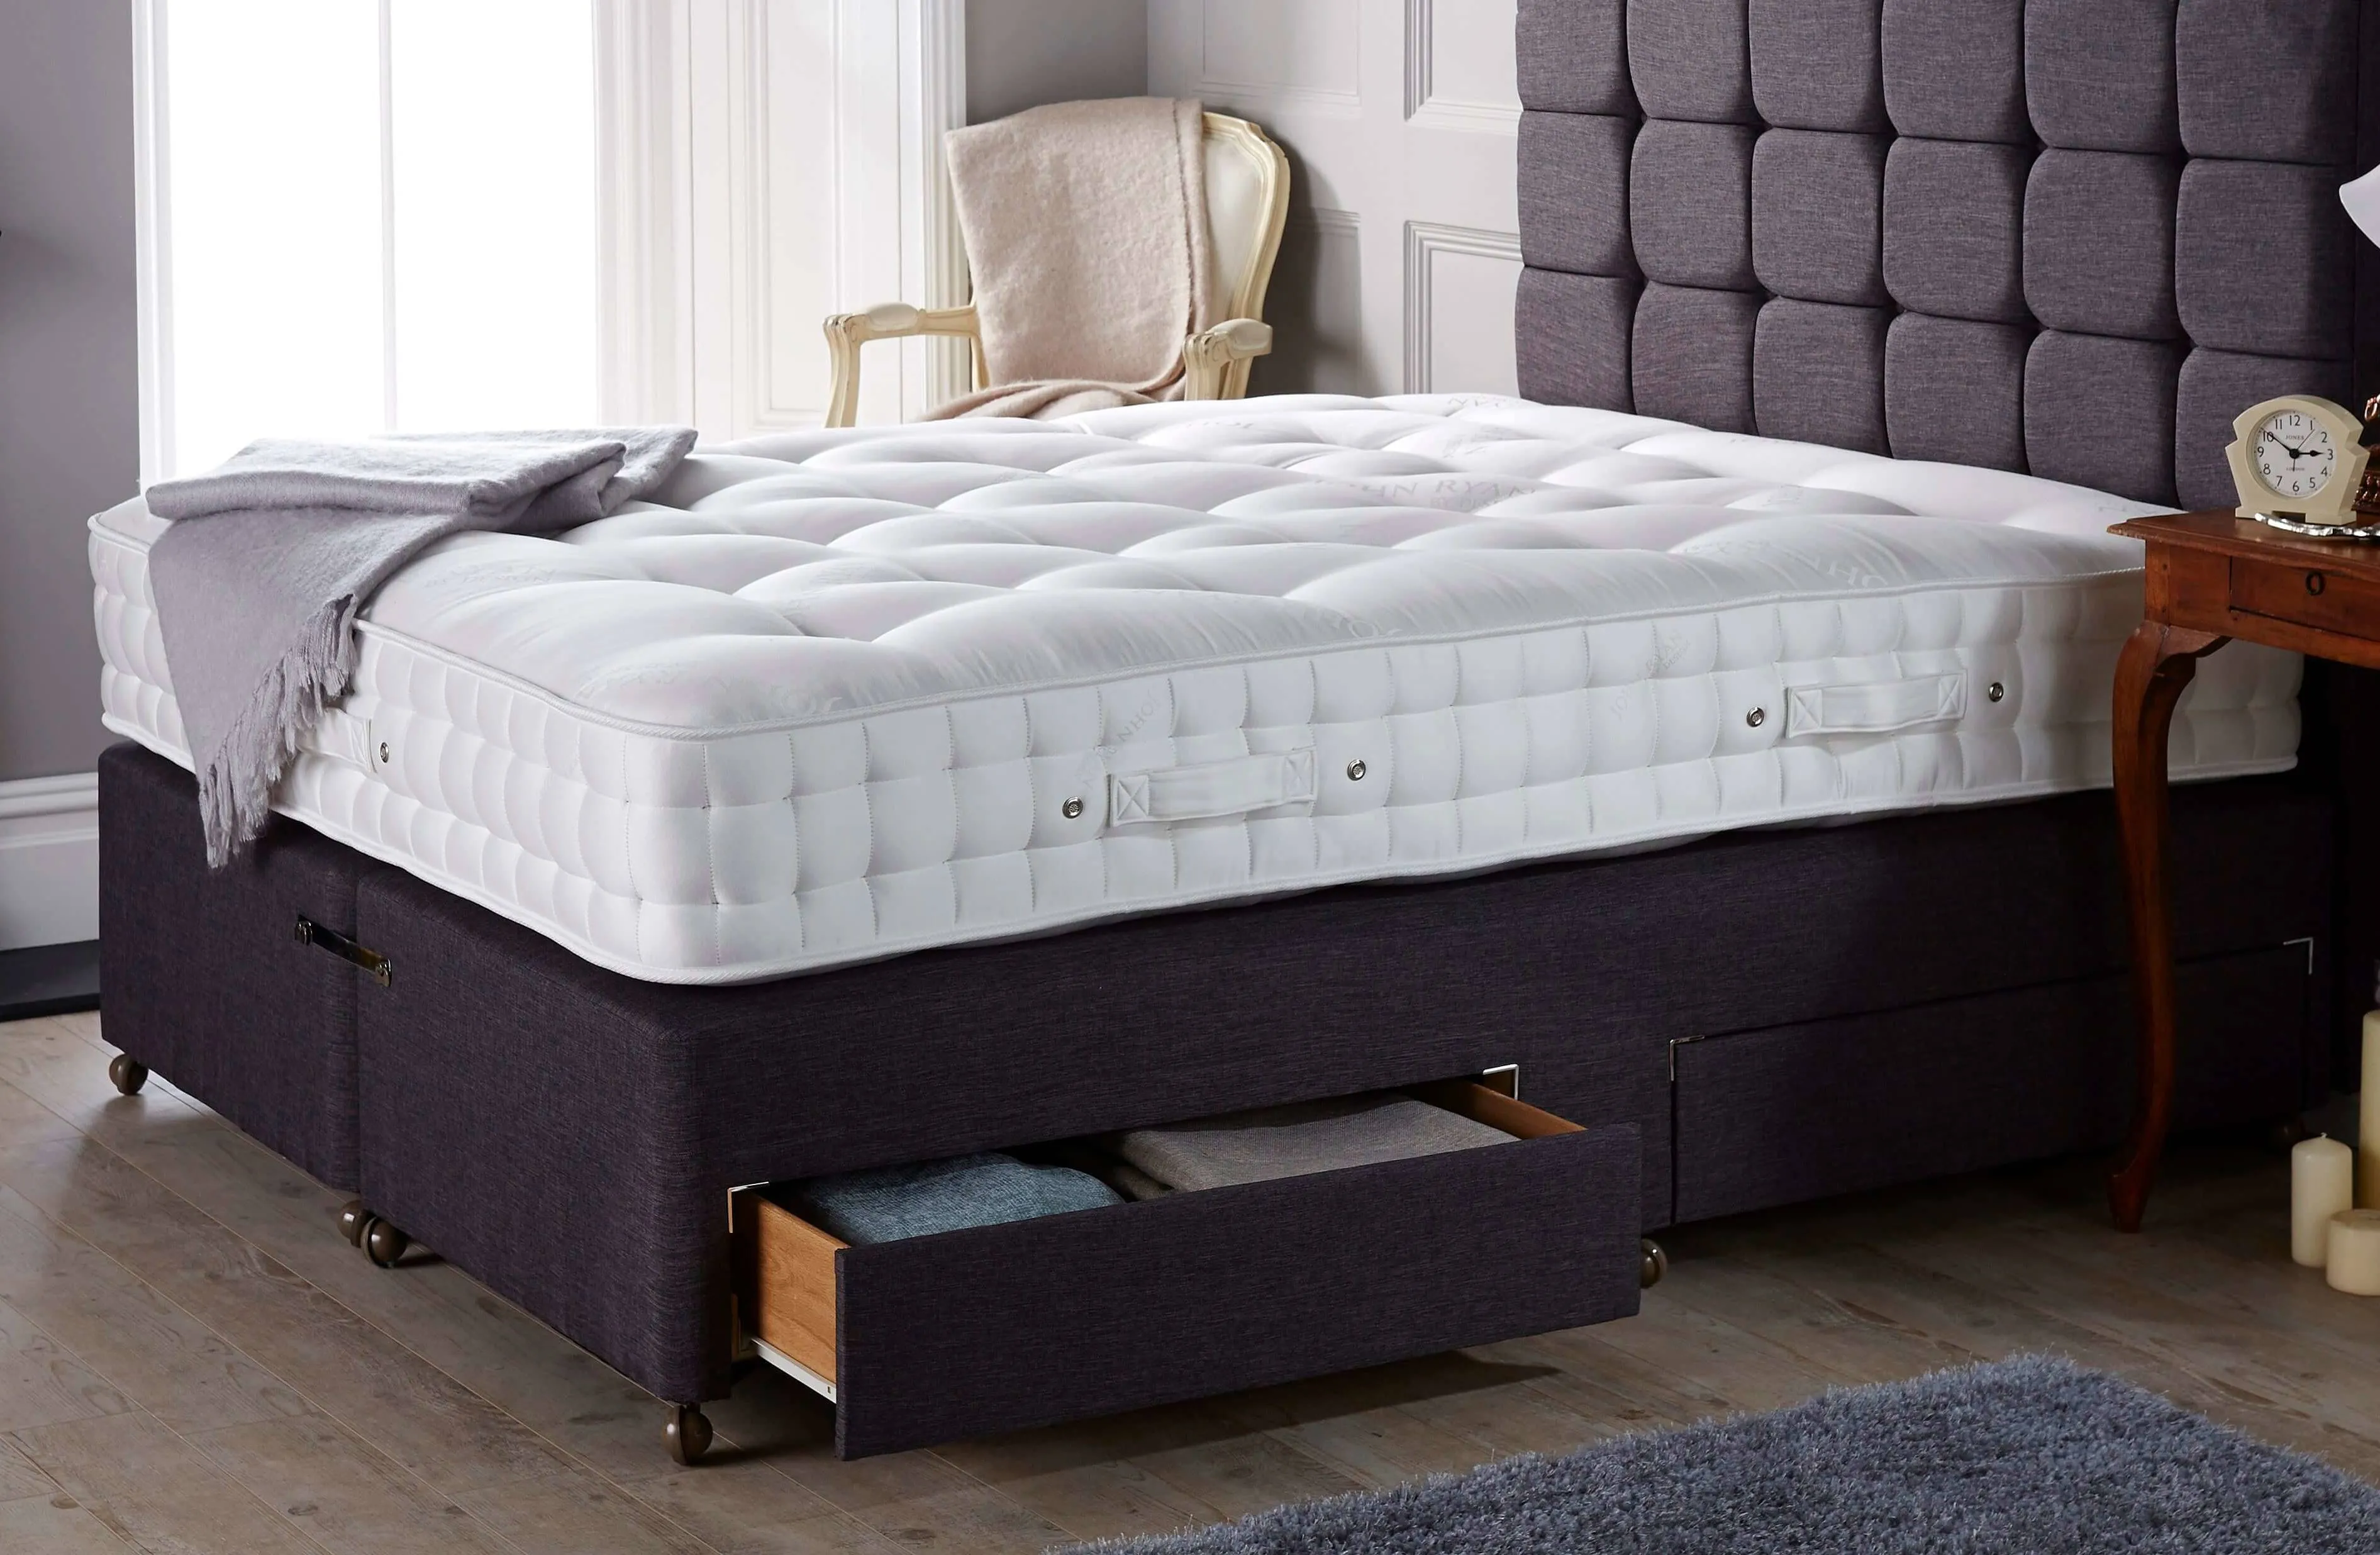 luxury mattresses & bases